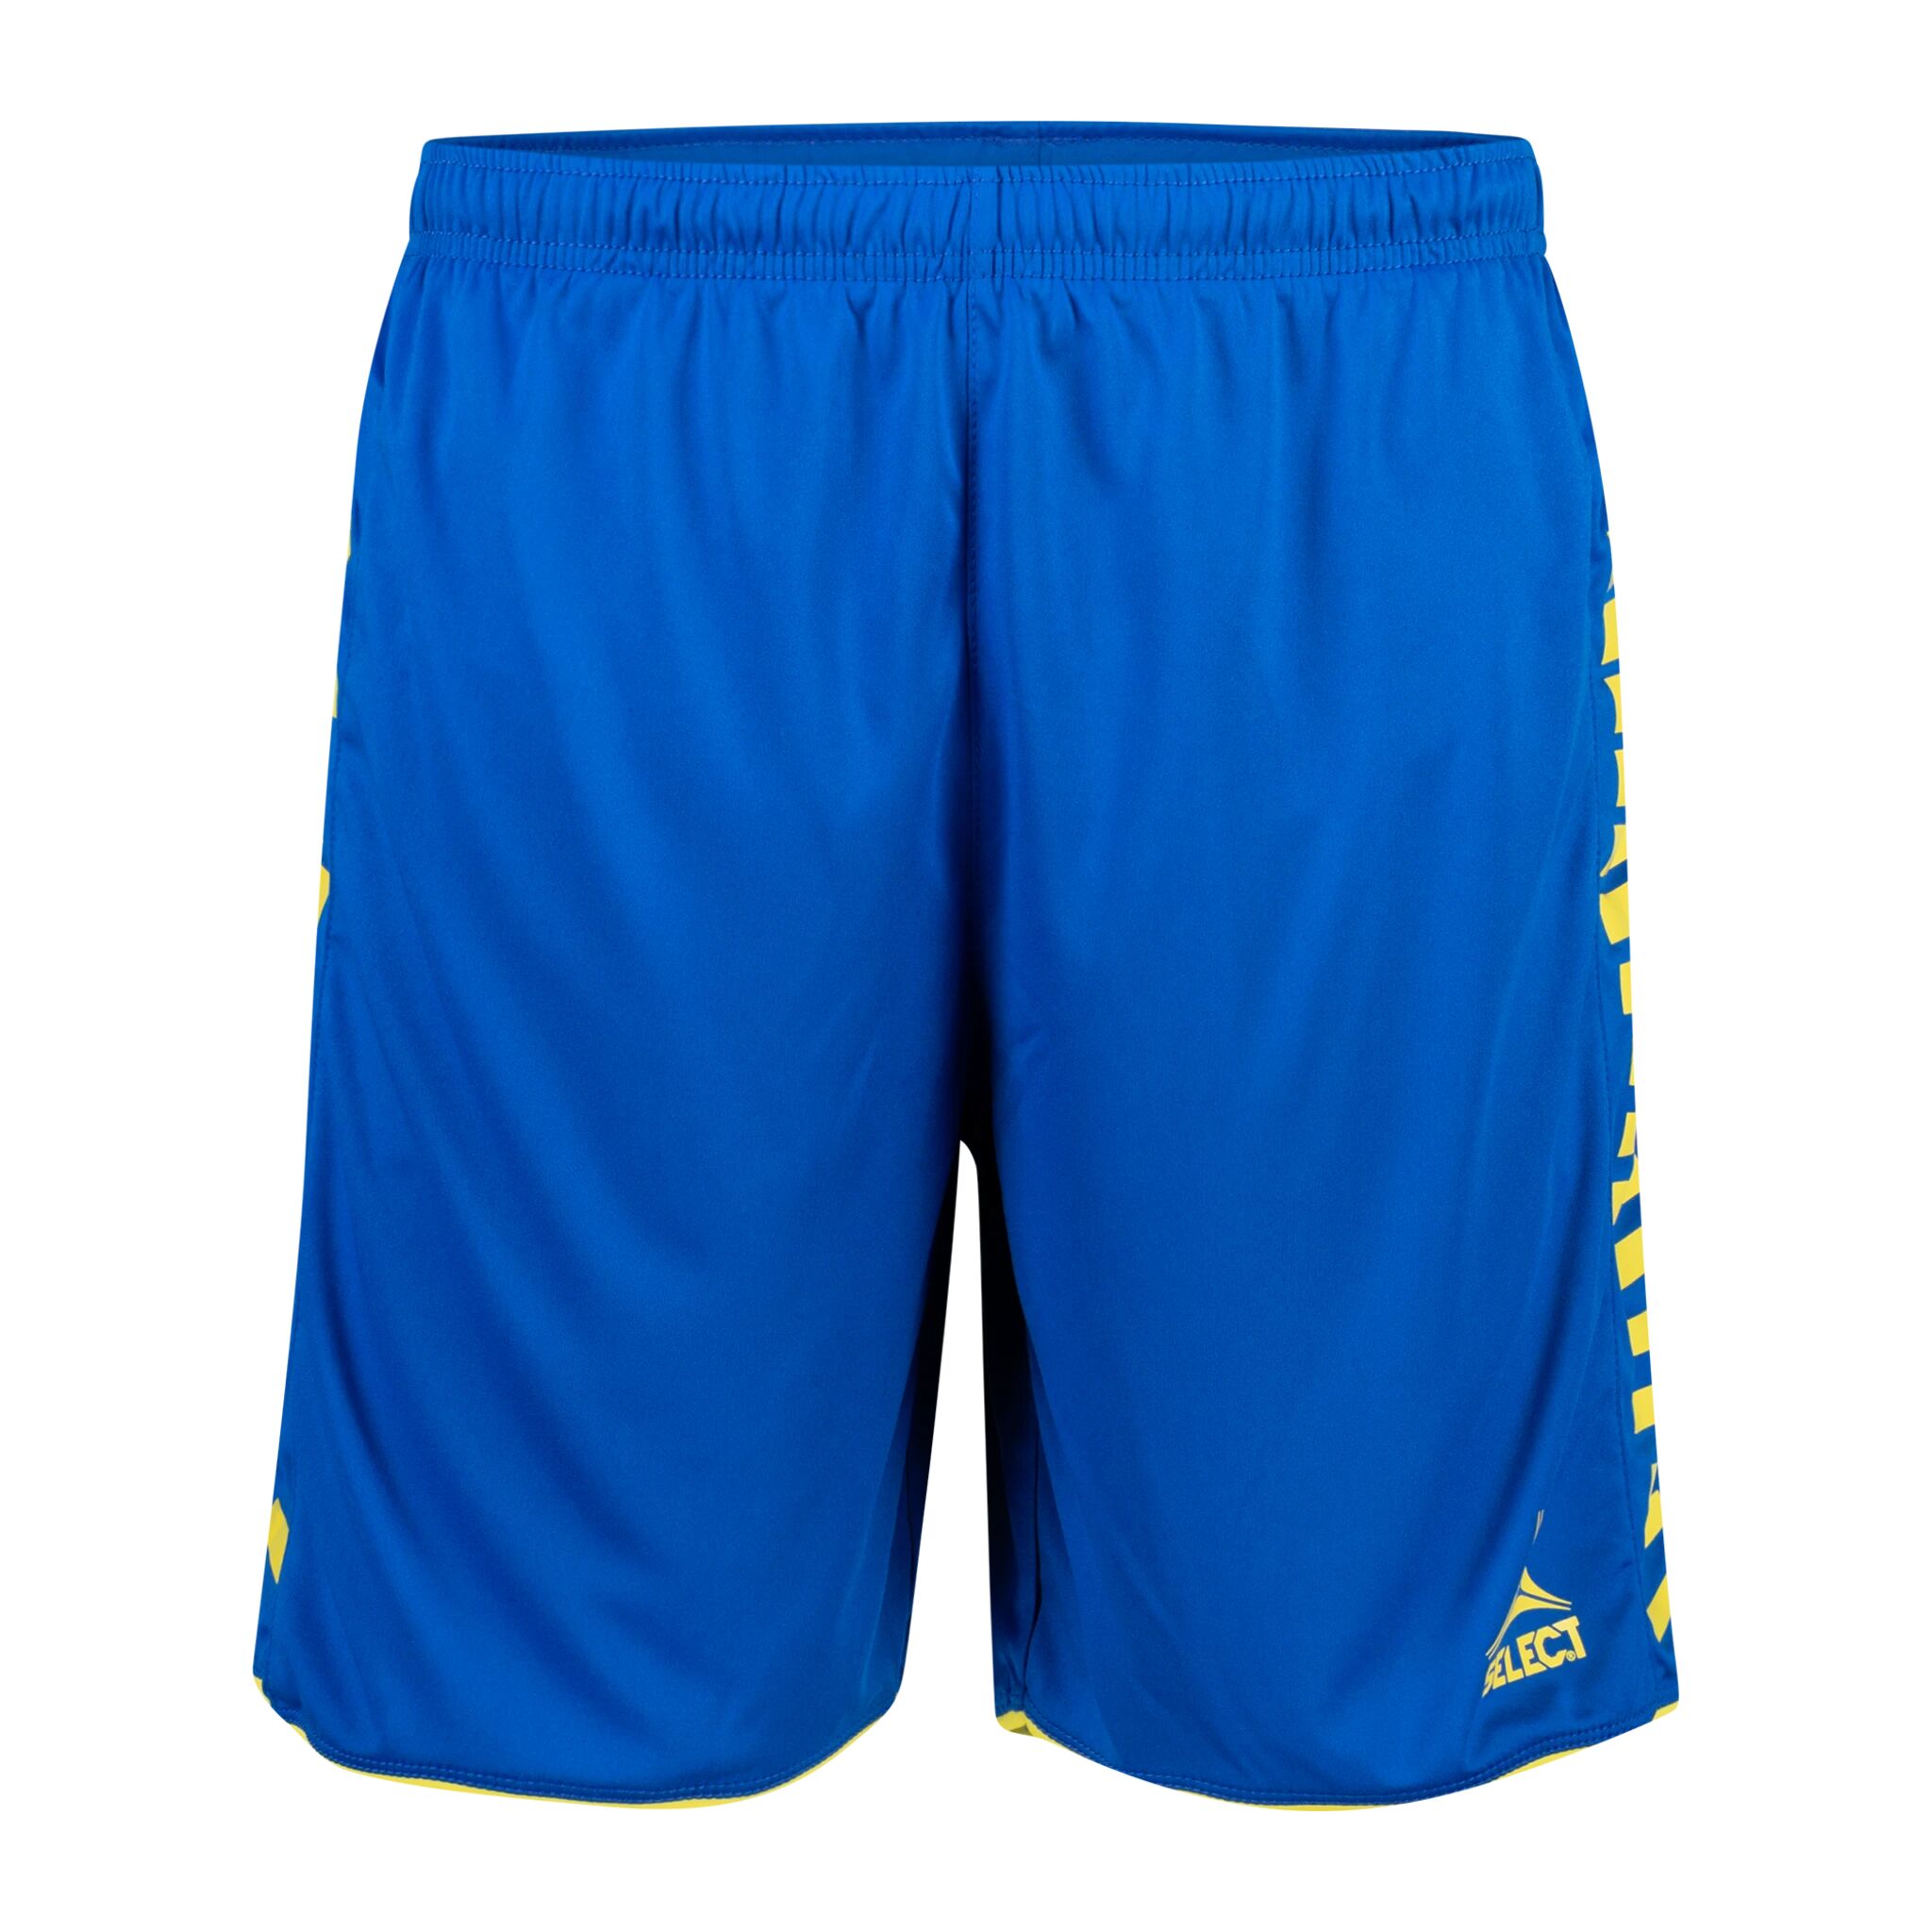 Select Player shorts Argentina, shorts Junior/Senior XL blue